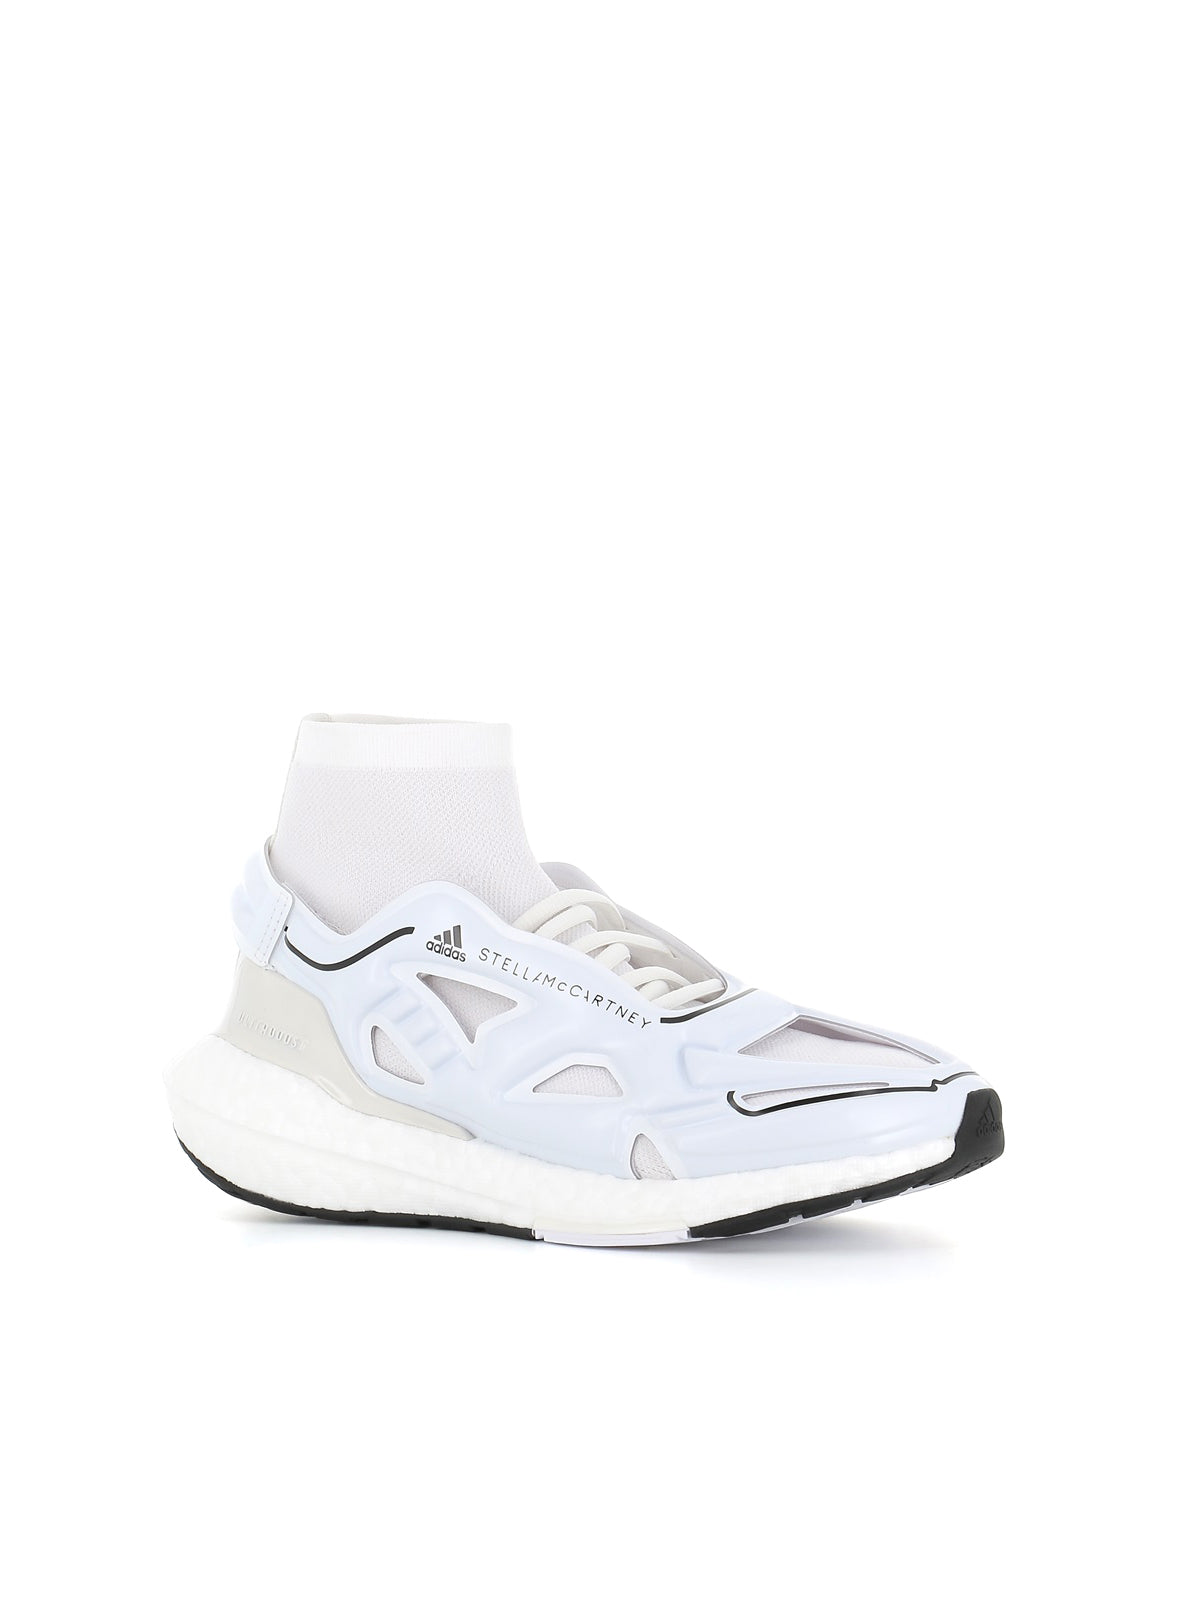  High Sneakers Asmc Ultraboost 22 Elevante Adidas By Stella Mccartney Donna Bianco - 3